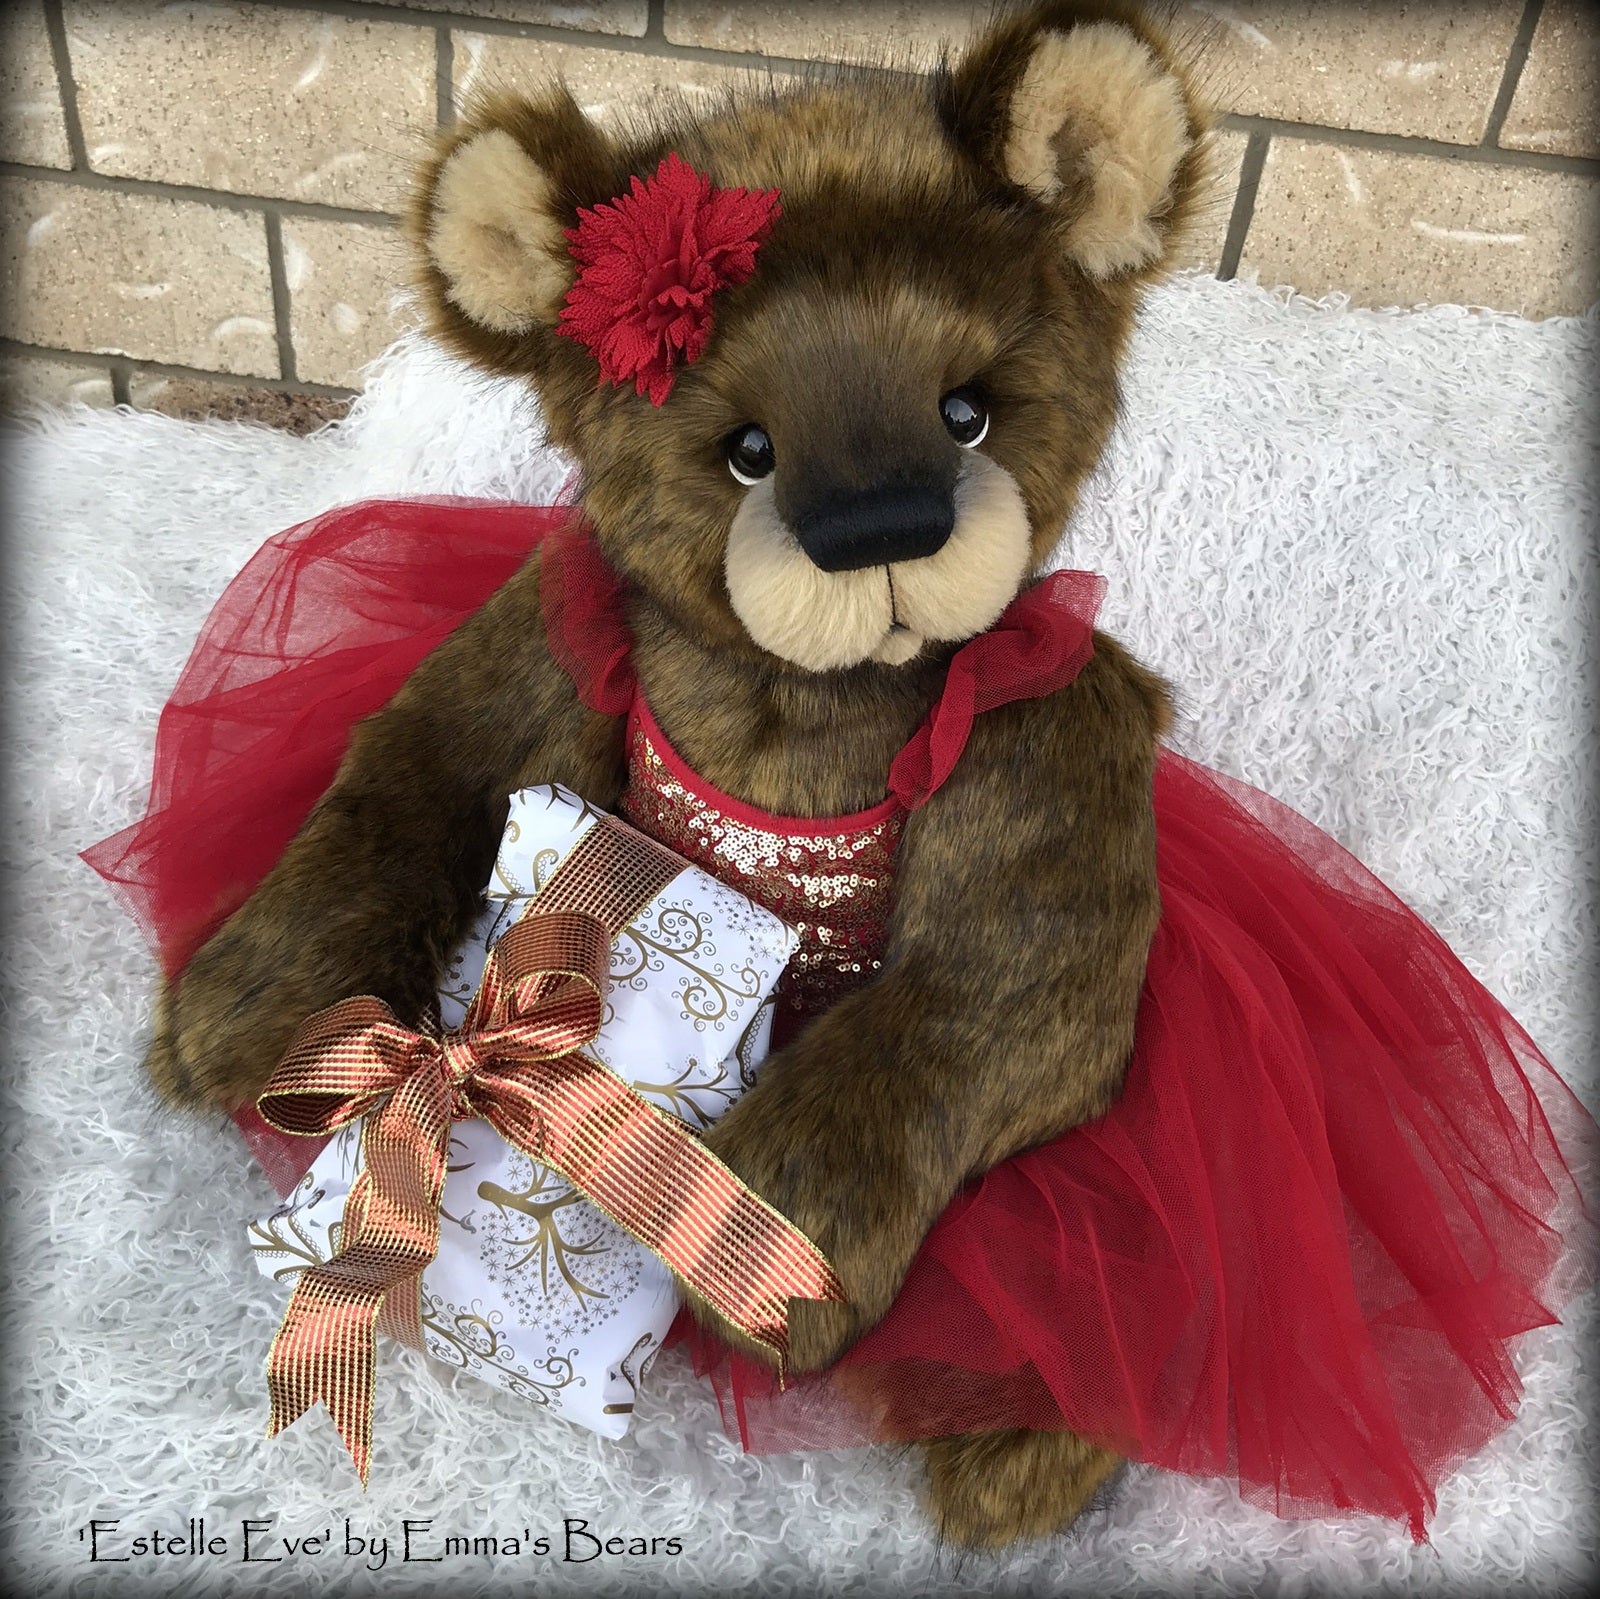 Estelle Eve - 25" Christmas 2018 Toddler Artist Bear by Emma's Bears - OOAK